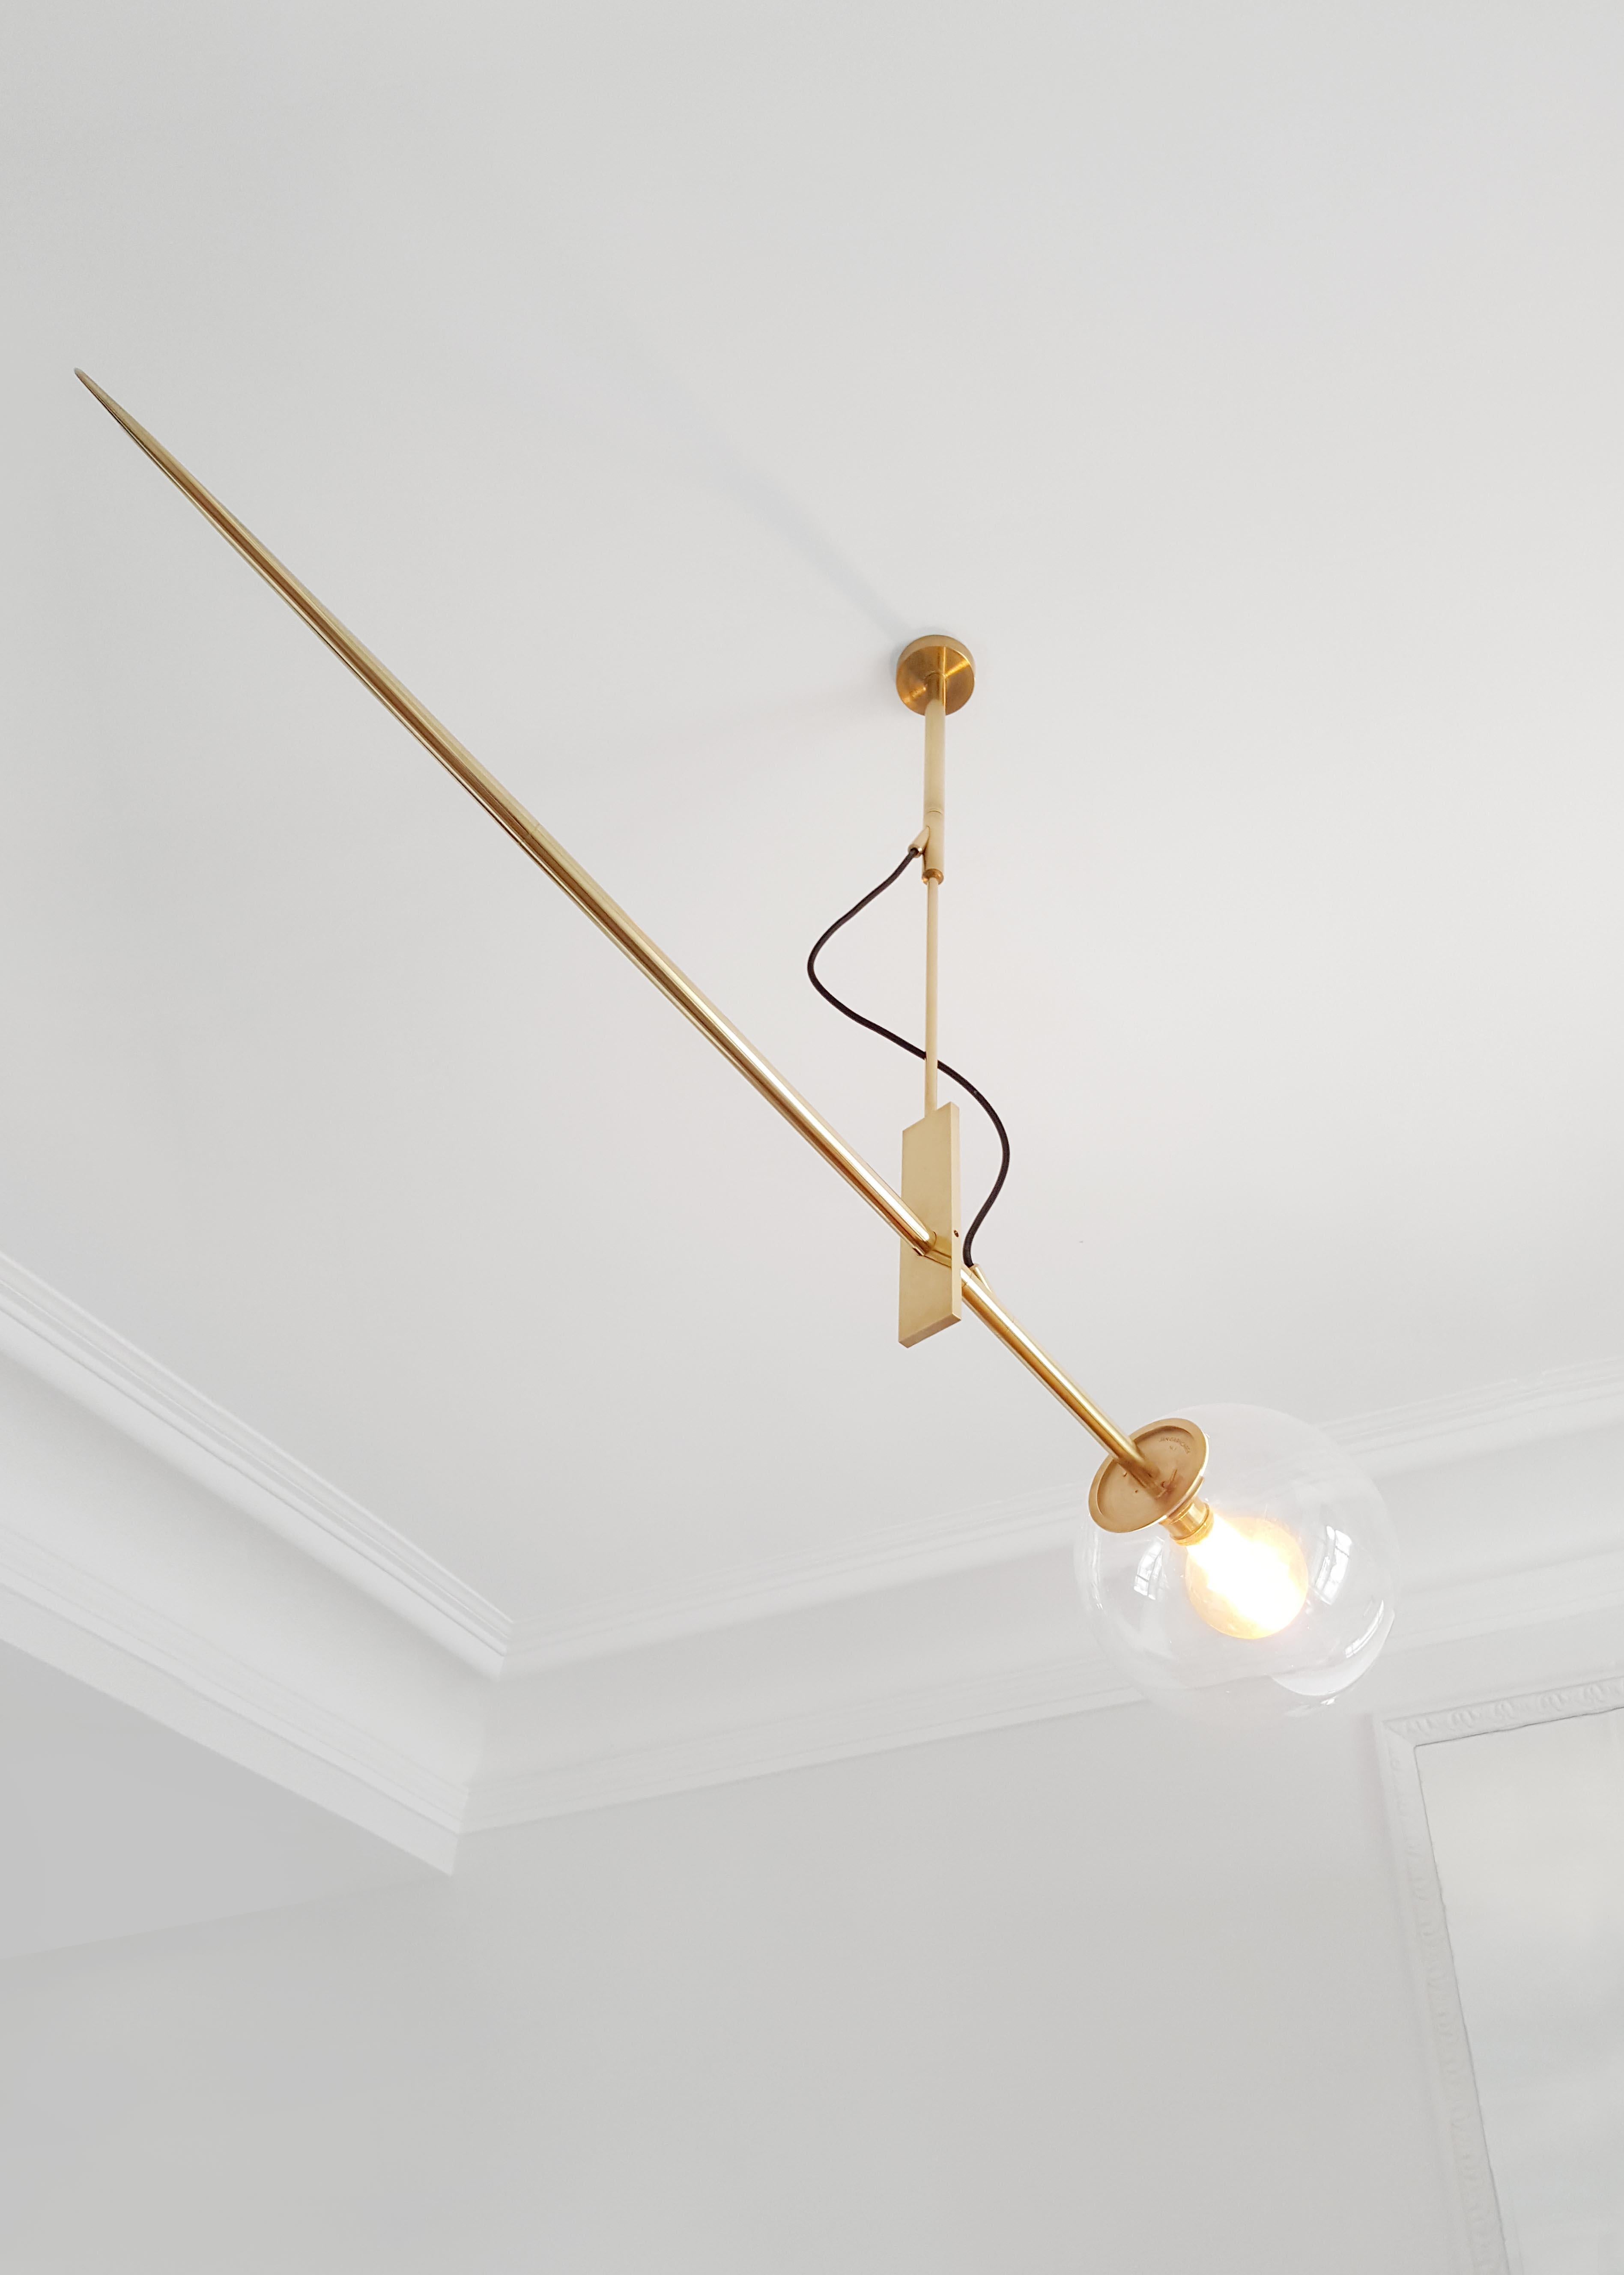 Hasta Brass Hanging Lamp, Jan Garncarek For Sale 3